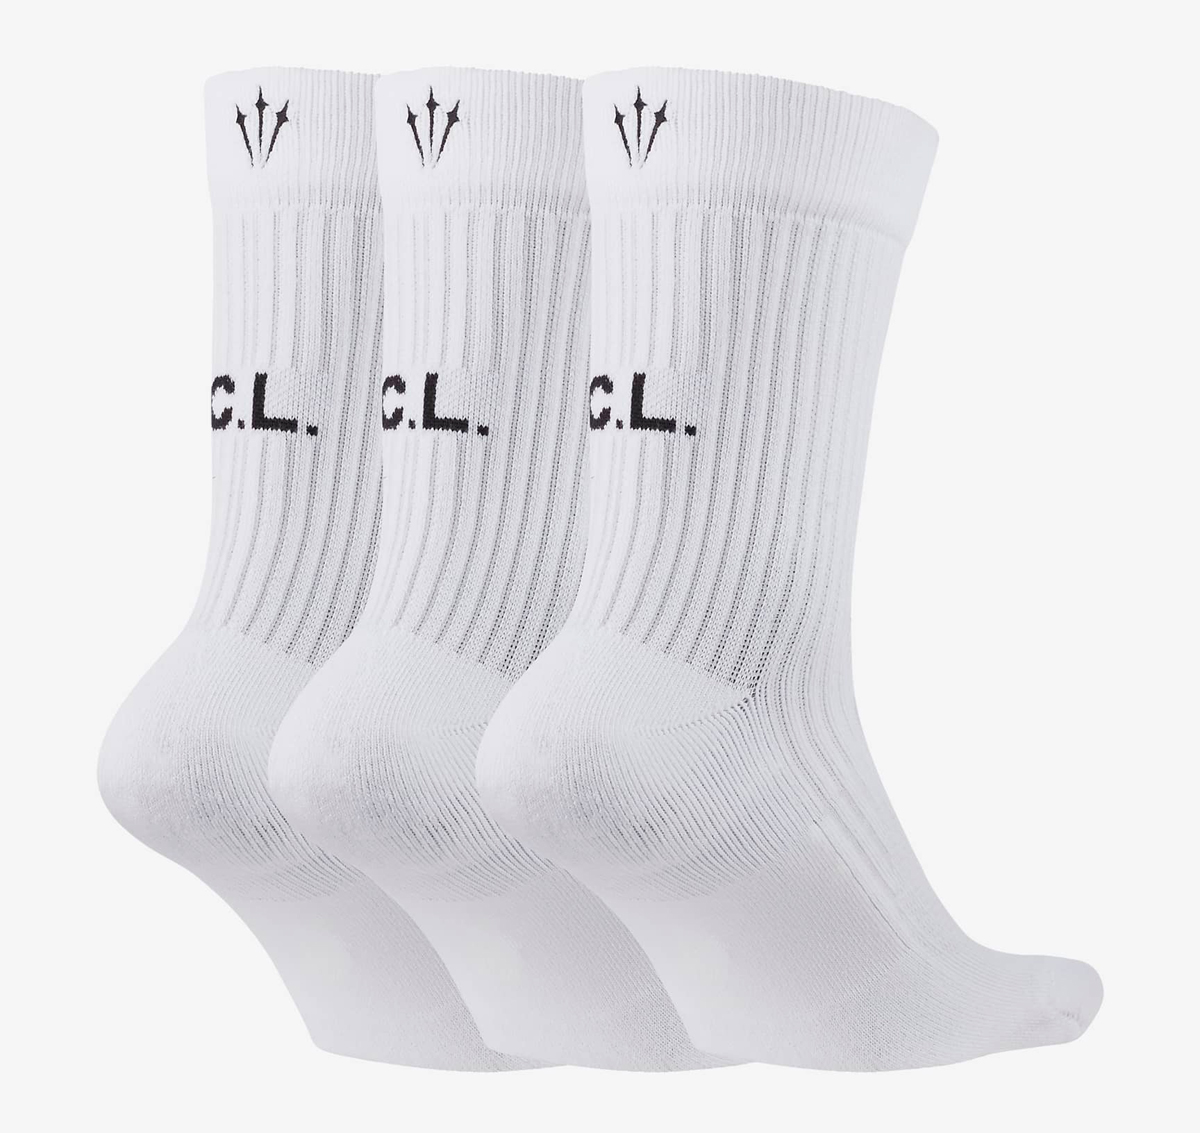 Drake-NOCTA-Nike-Socks-2